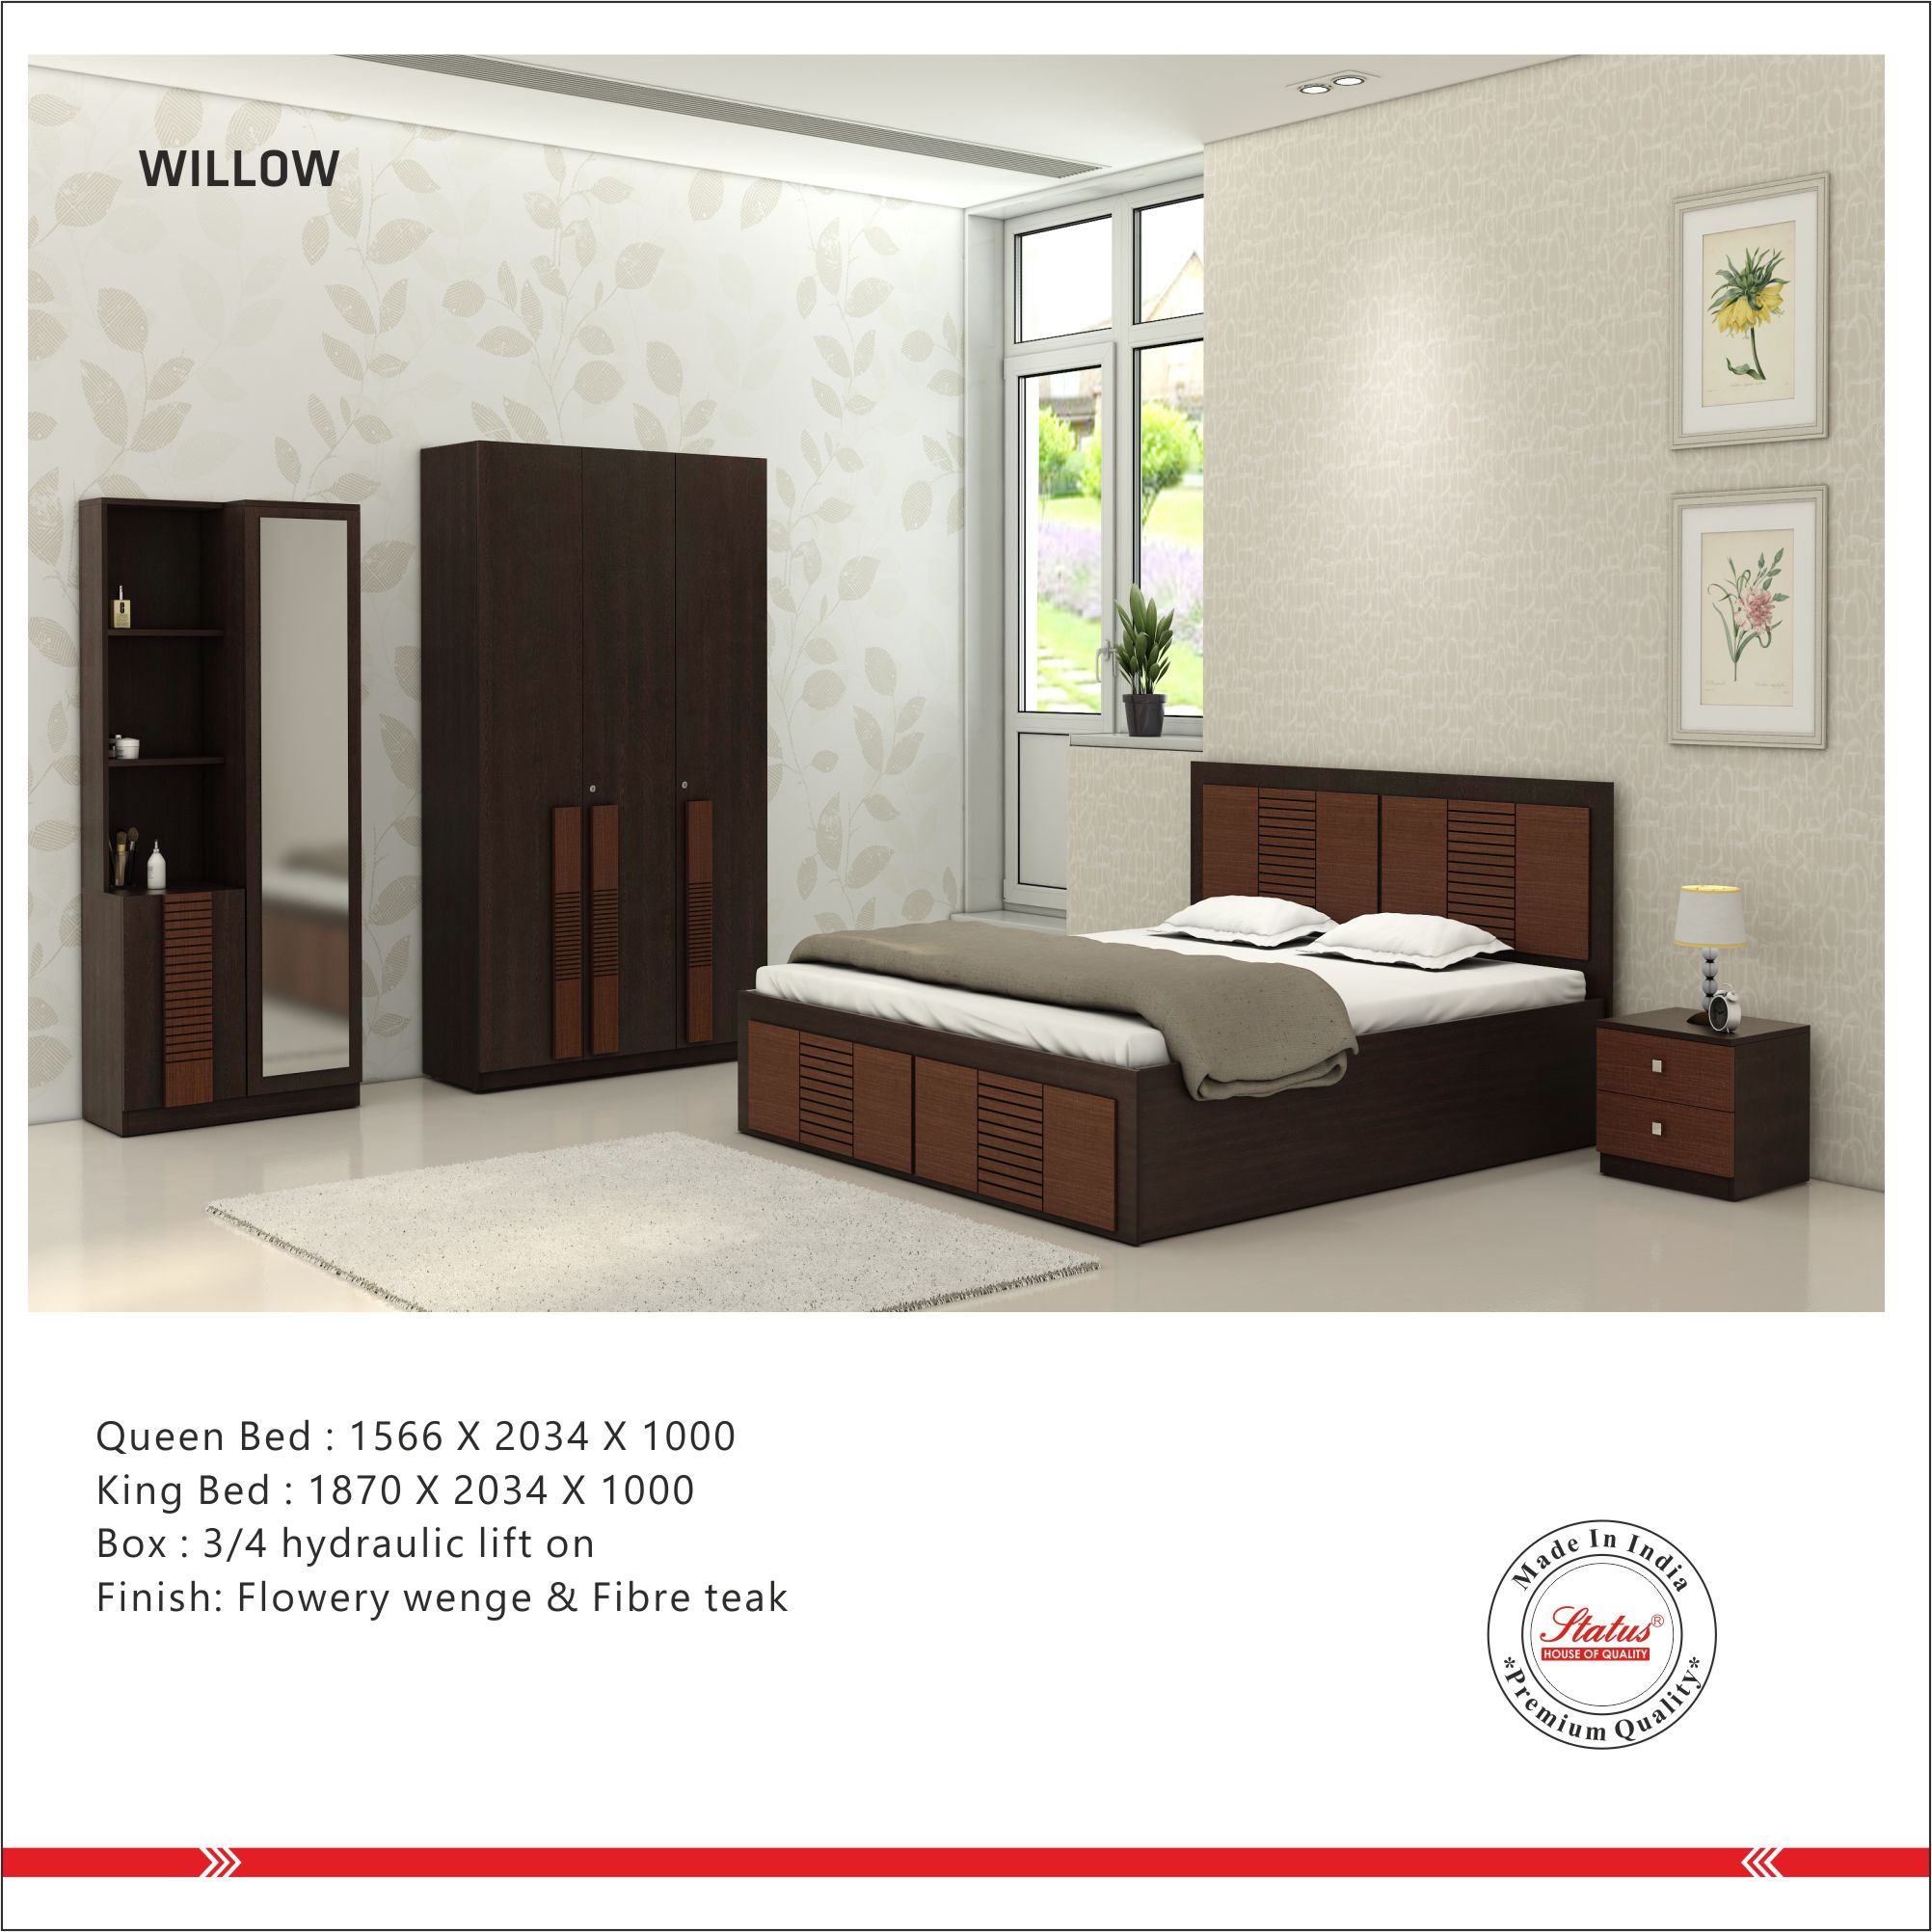 Willow King Size Bed - Status Furniture